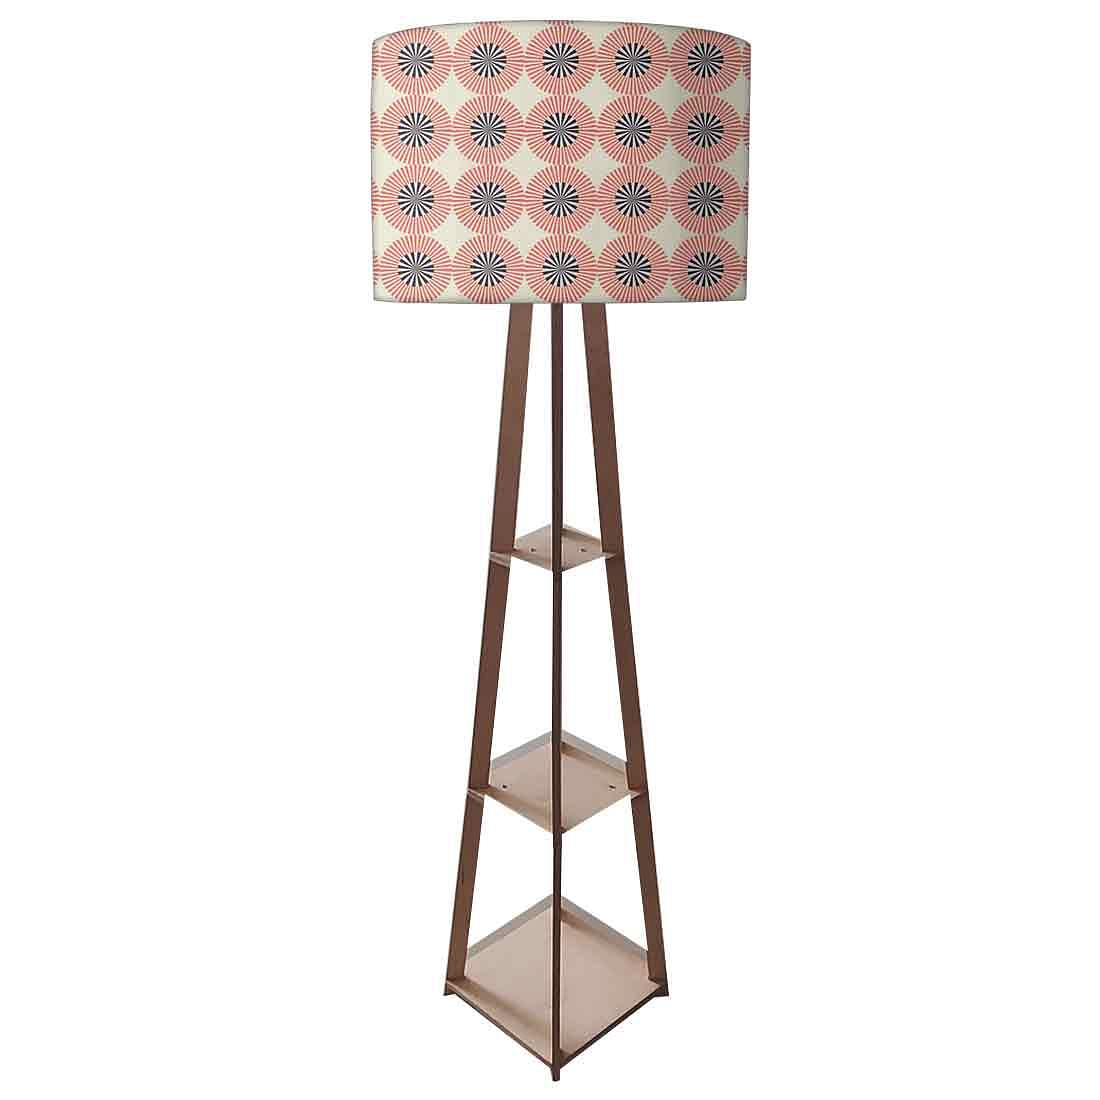 Floor Lamps for Living Room  -   Retro Design Nutcase